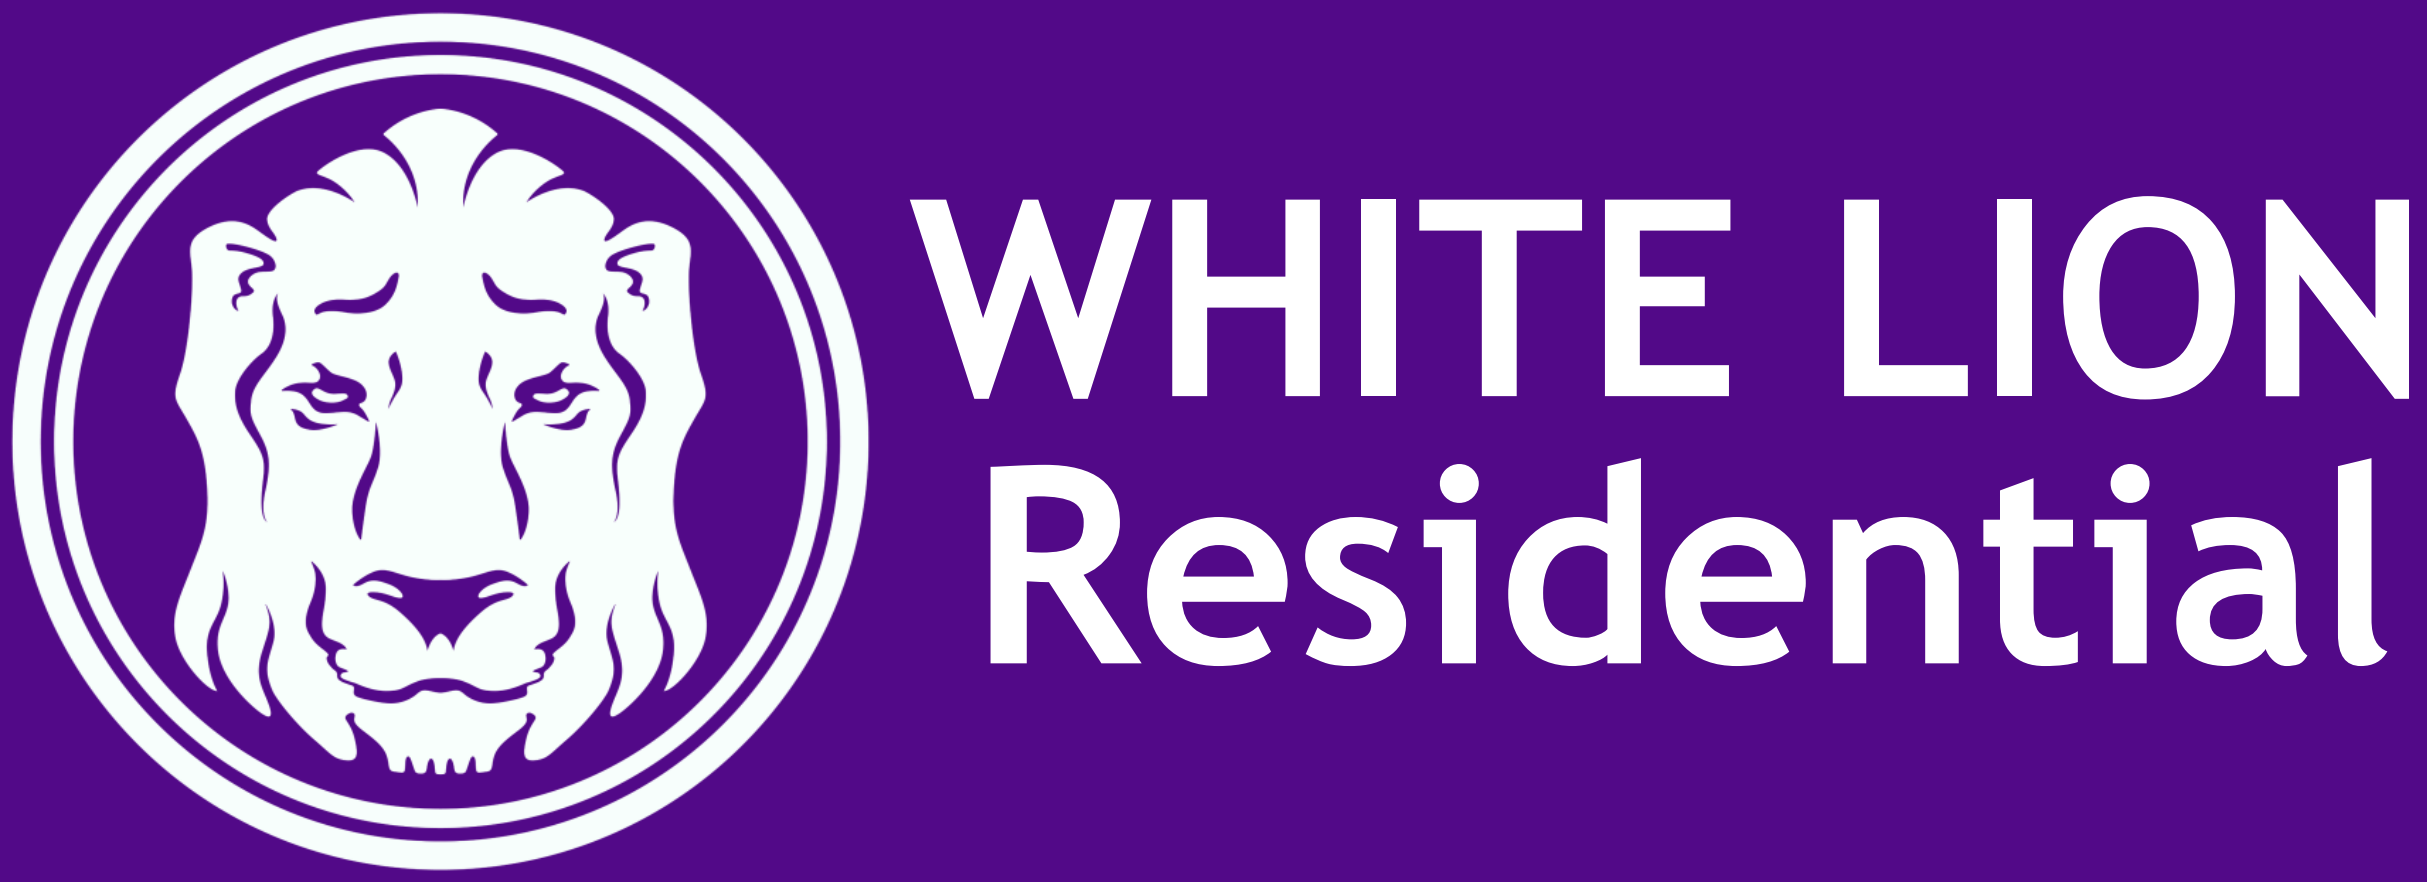 White Lion Residential